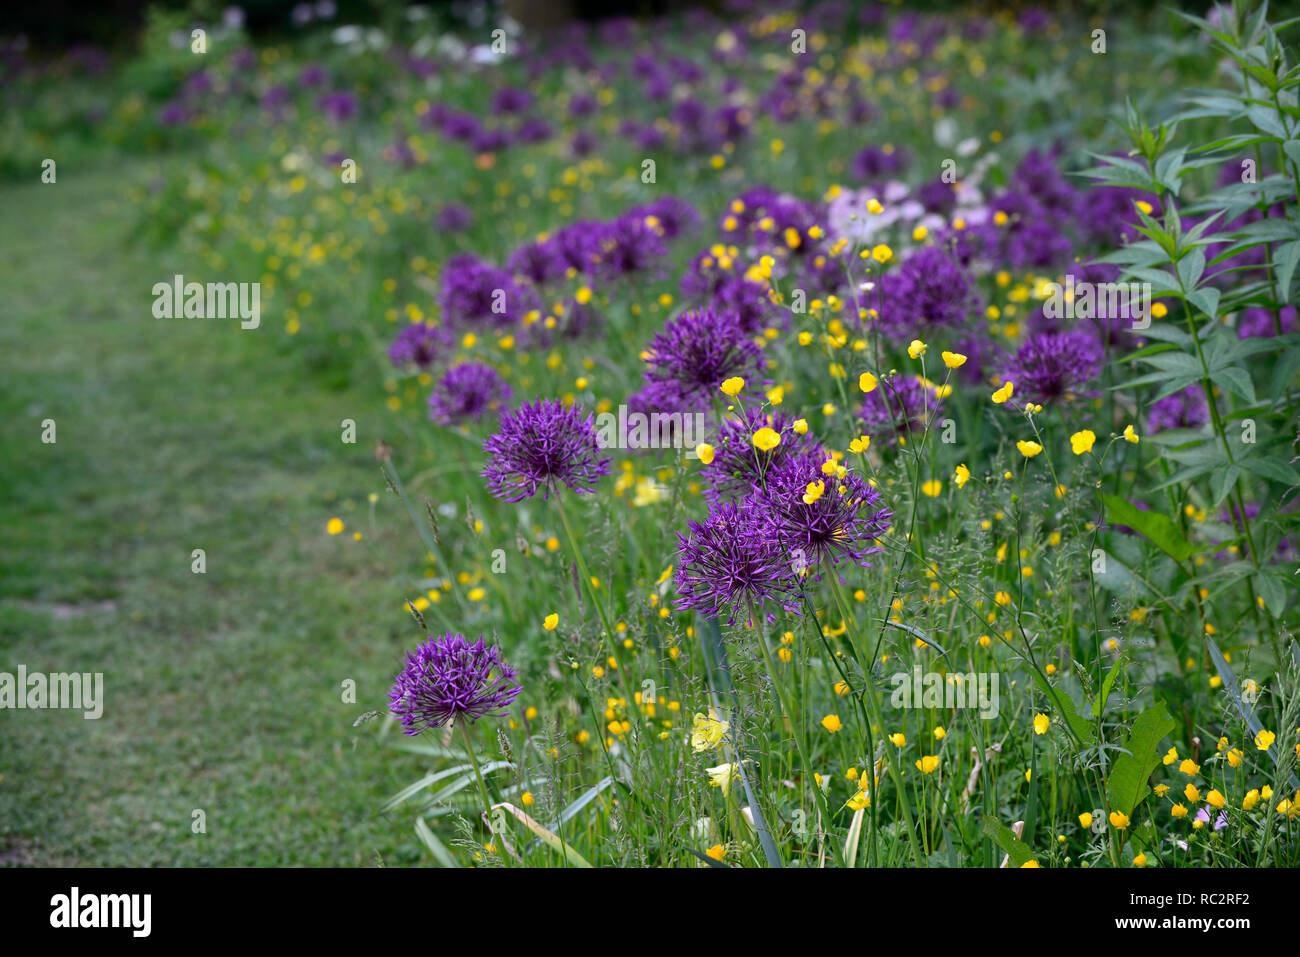 Allium Purple Rain,Buttercups,Wildflower meadow,yellow white purple flowers,flowering,mix,mixed,combination,bed,border,planting scheme,RM floral, Stock Photo